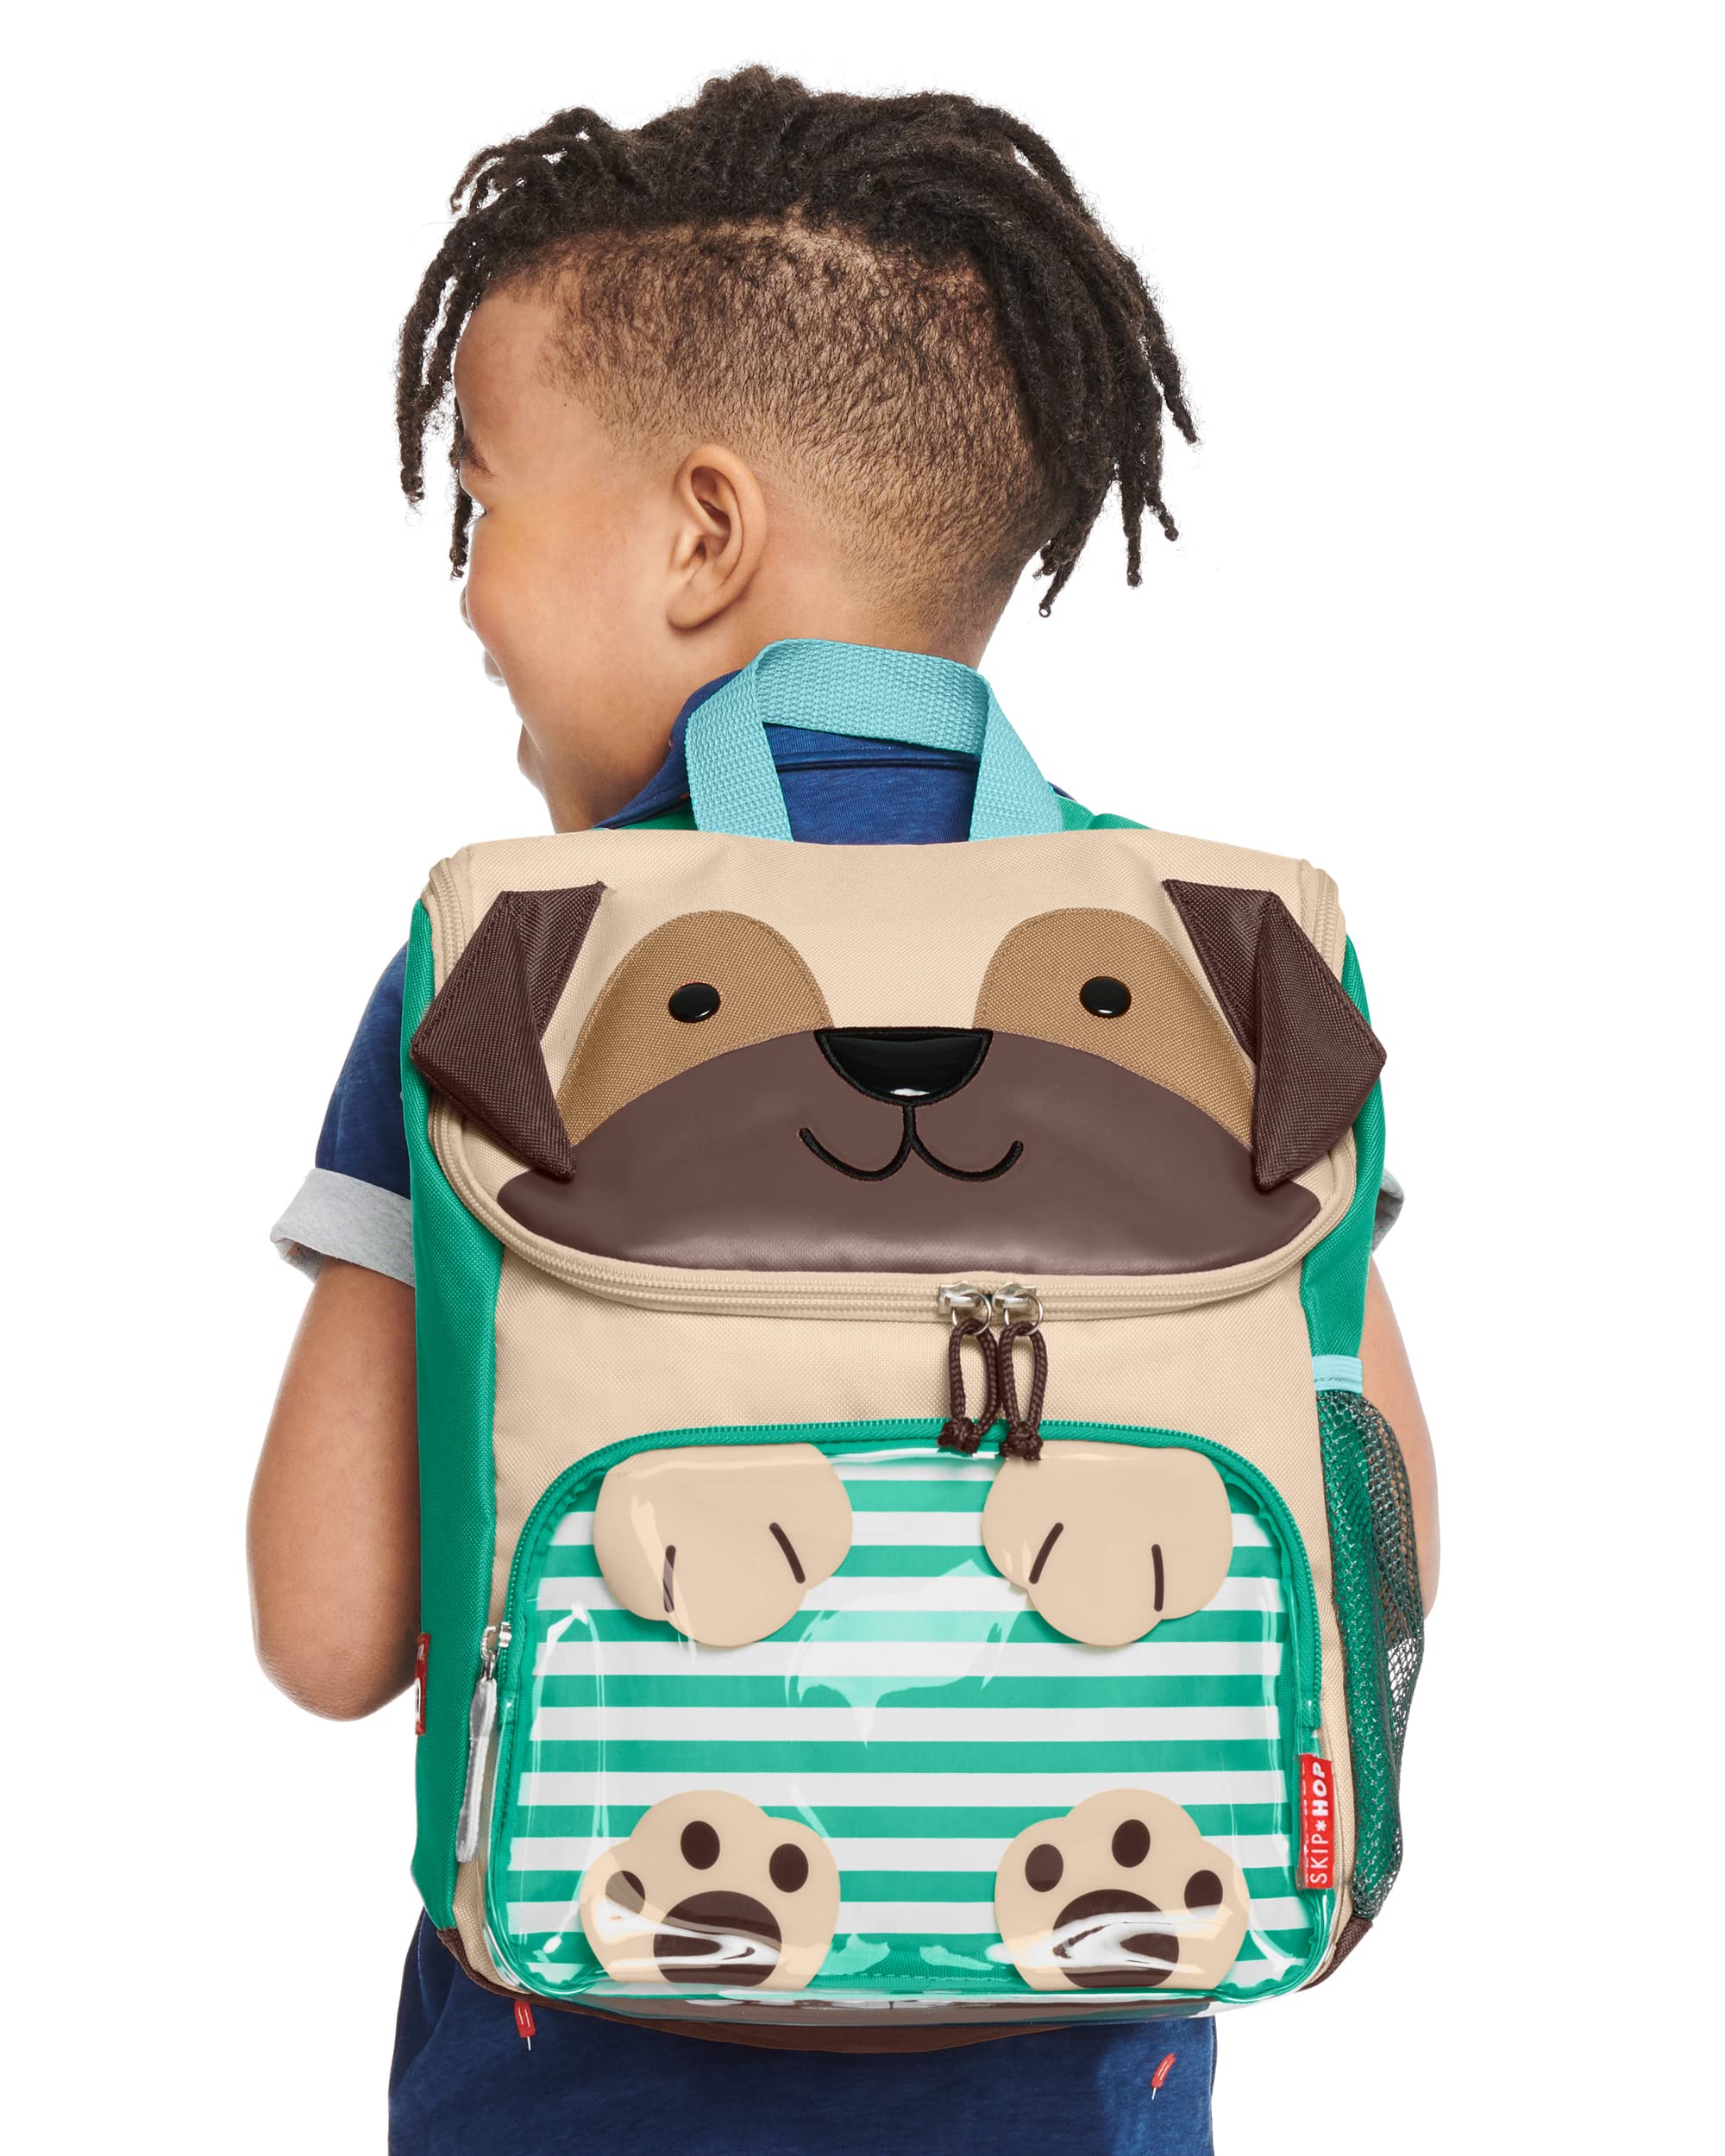 Skip Hop Big Kid Backpack, Zoo Kindergarten Ages 3-4, Pug